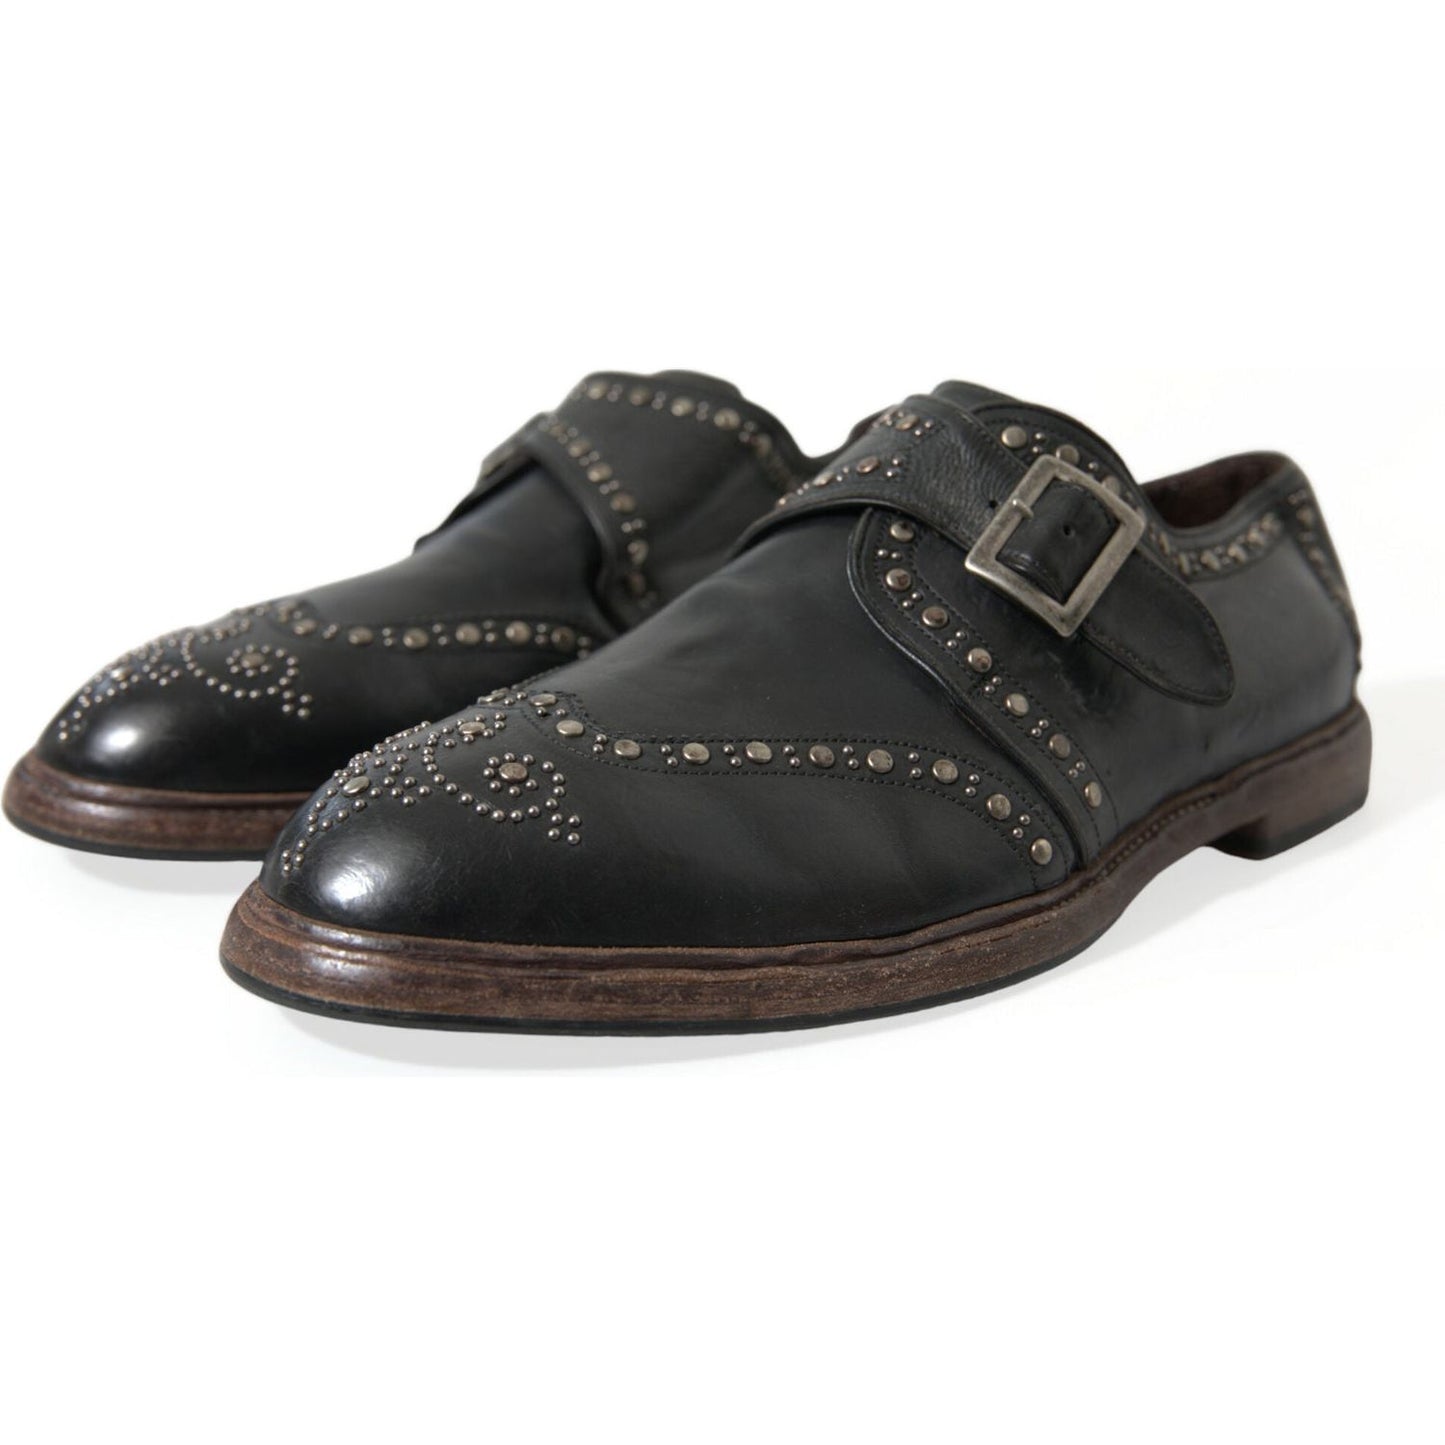 Dolce & Gabbana Elegant Calfskin Leather Monk Straps black-leather-monk-strap-studded-dress-shoes